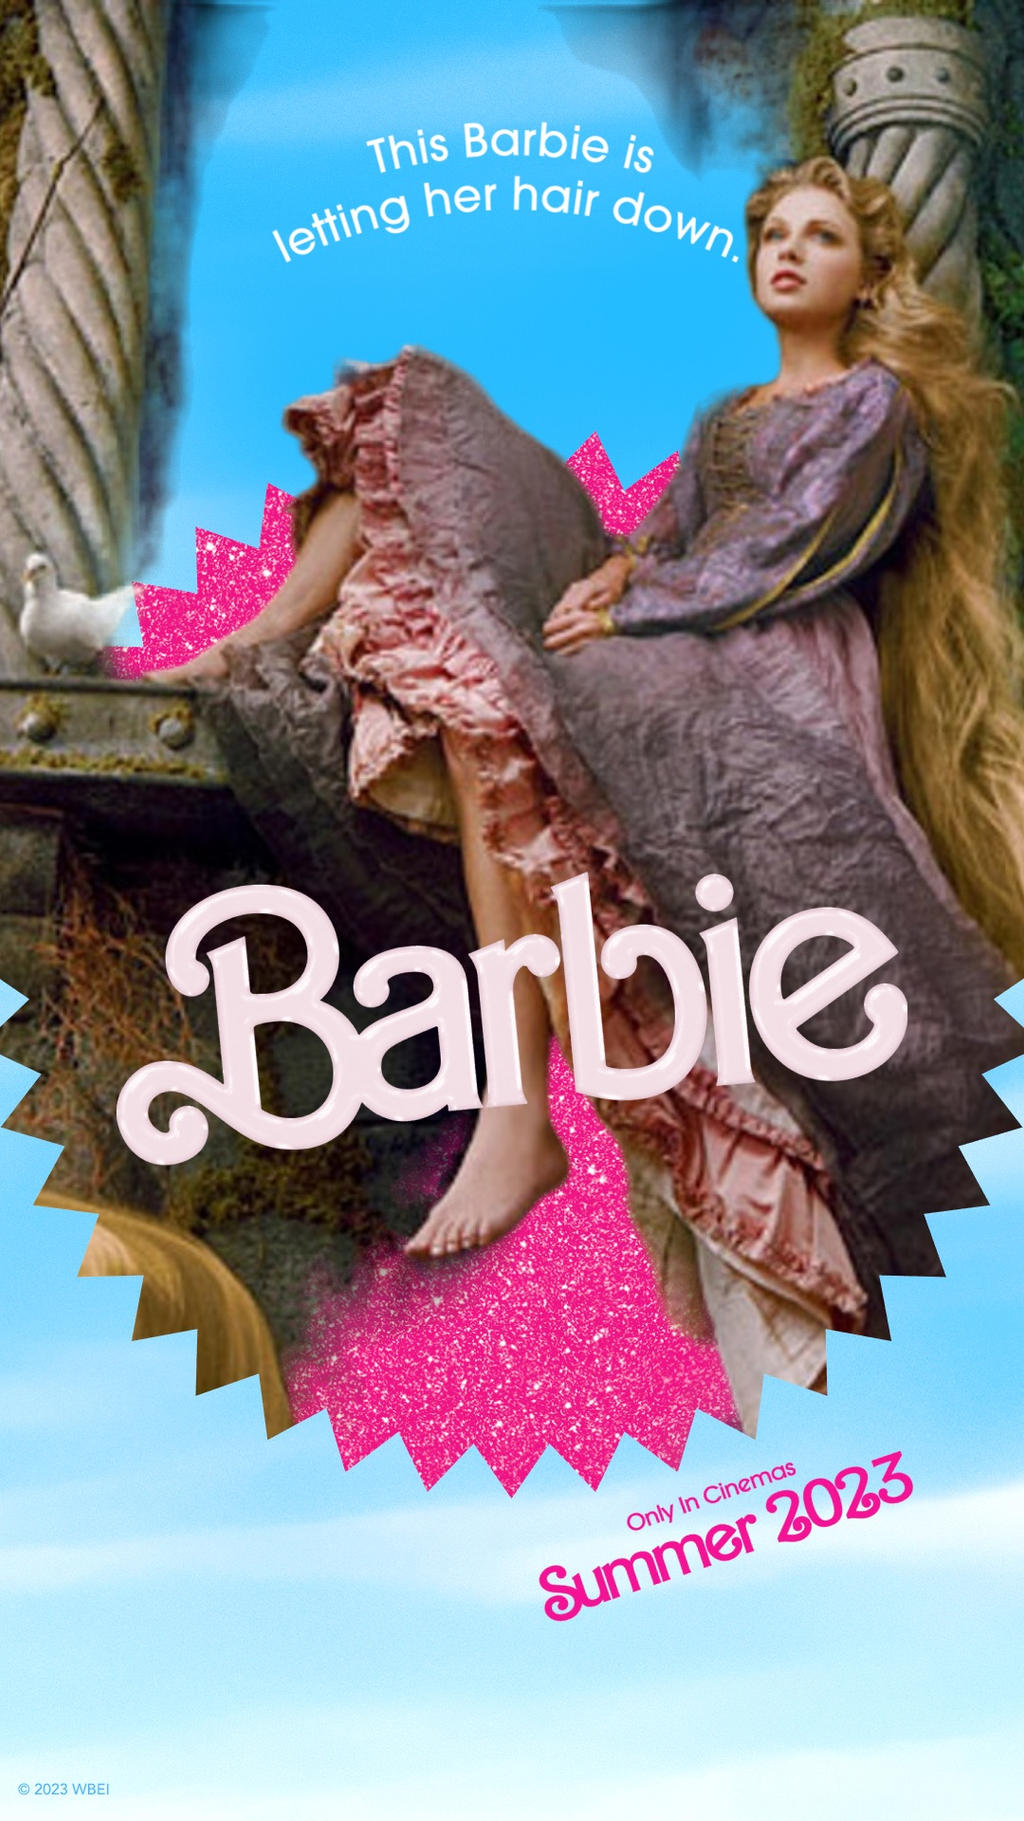 Disney Princess 10 - Rapunzel Barbie (TANGLED) by SamTBear on DeviantArt